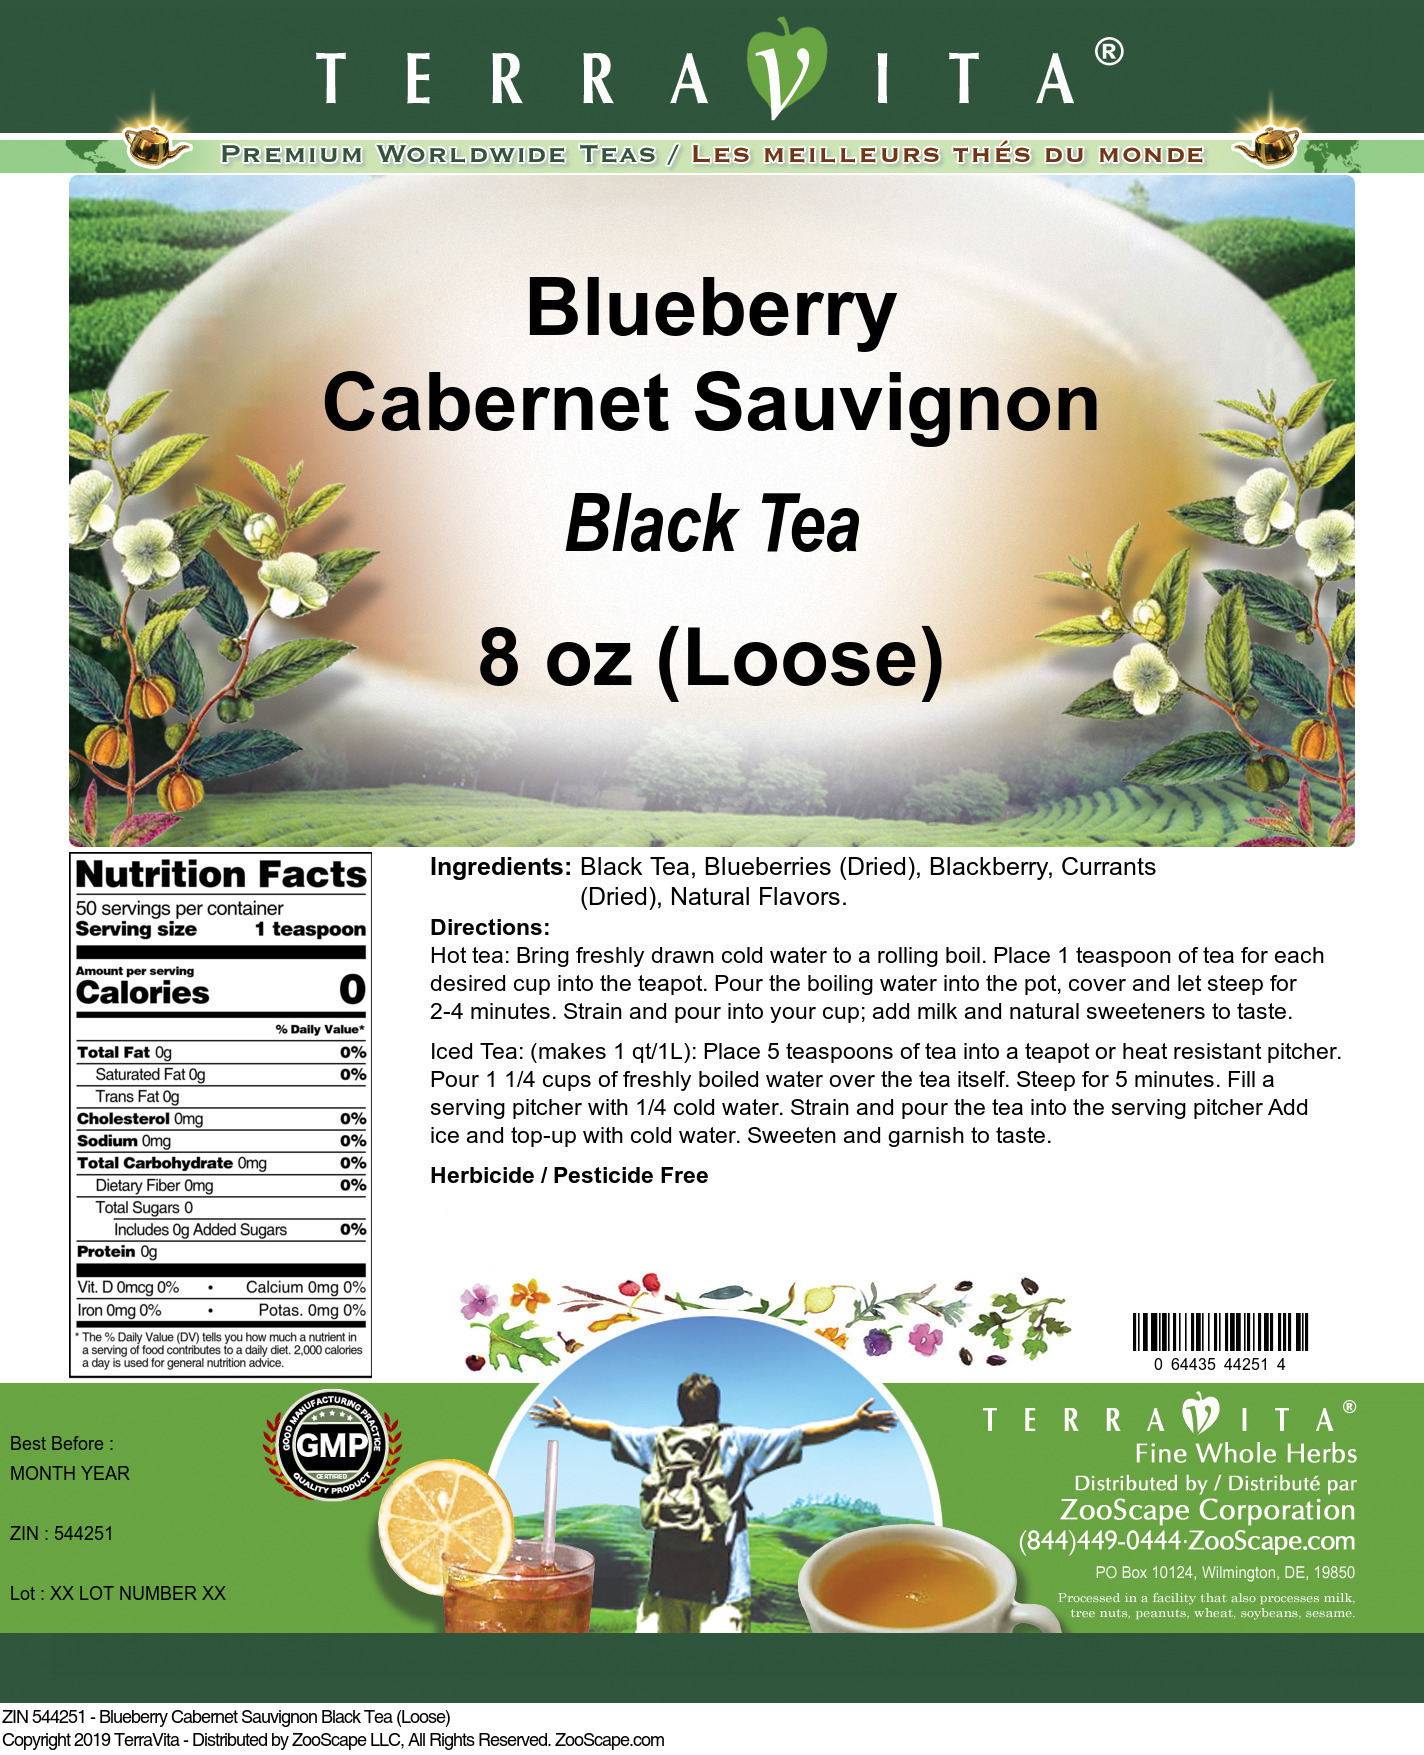 Blueberry Cabernet Sauvignon Black Tea (Loose) - Label